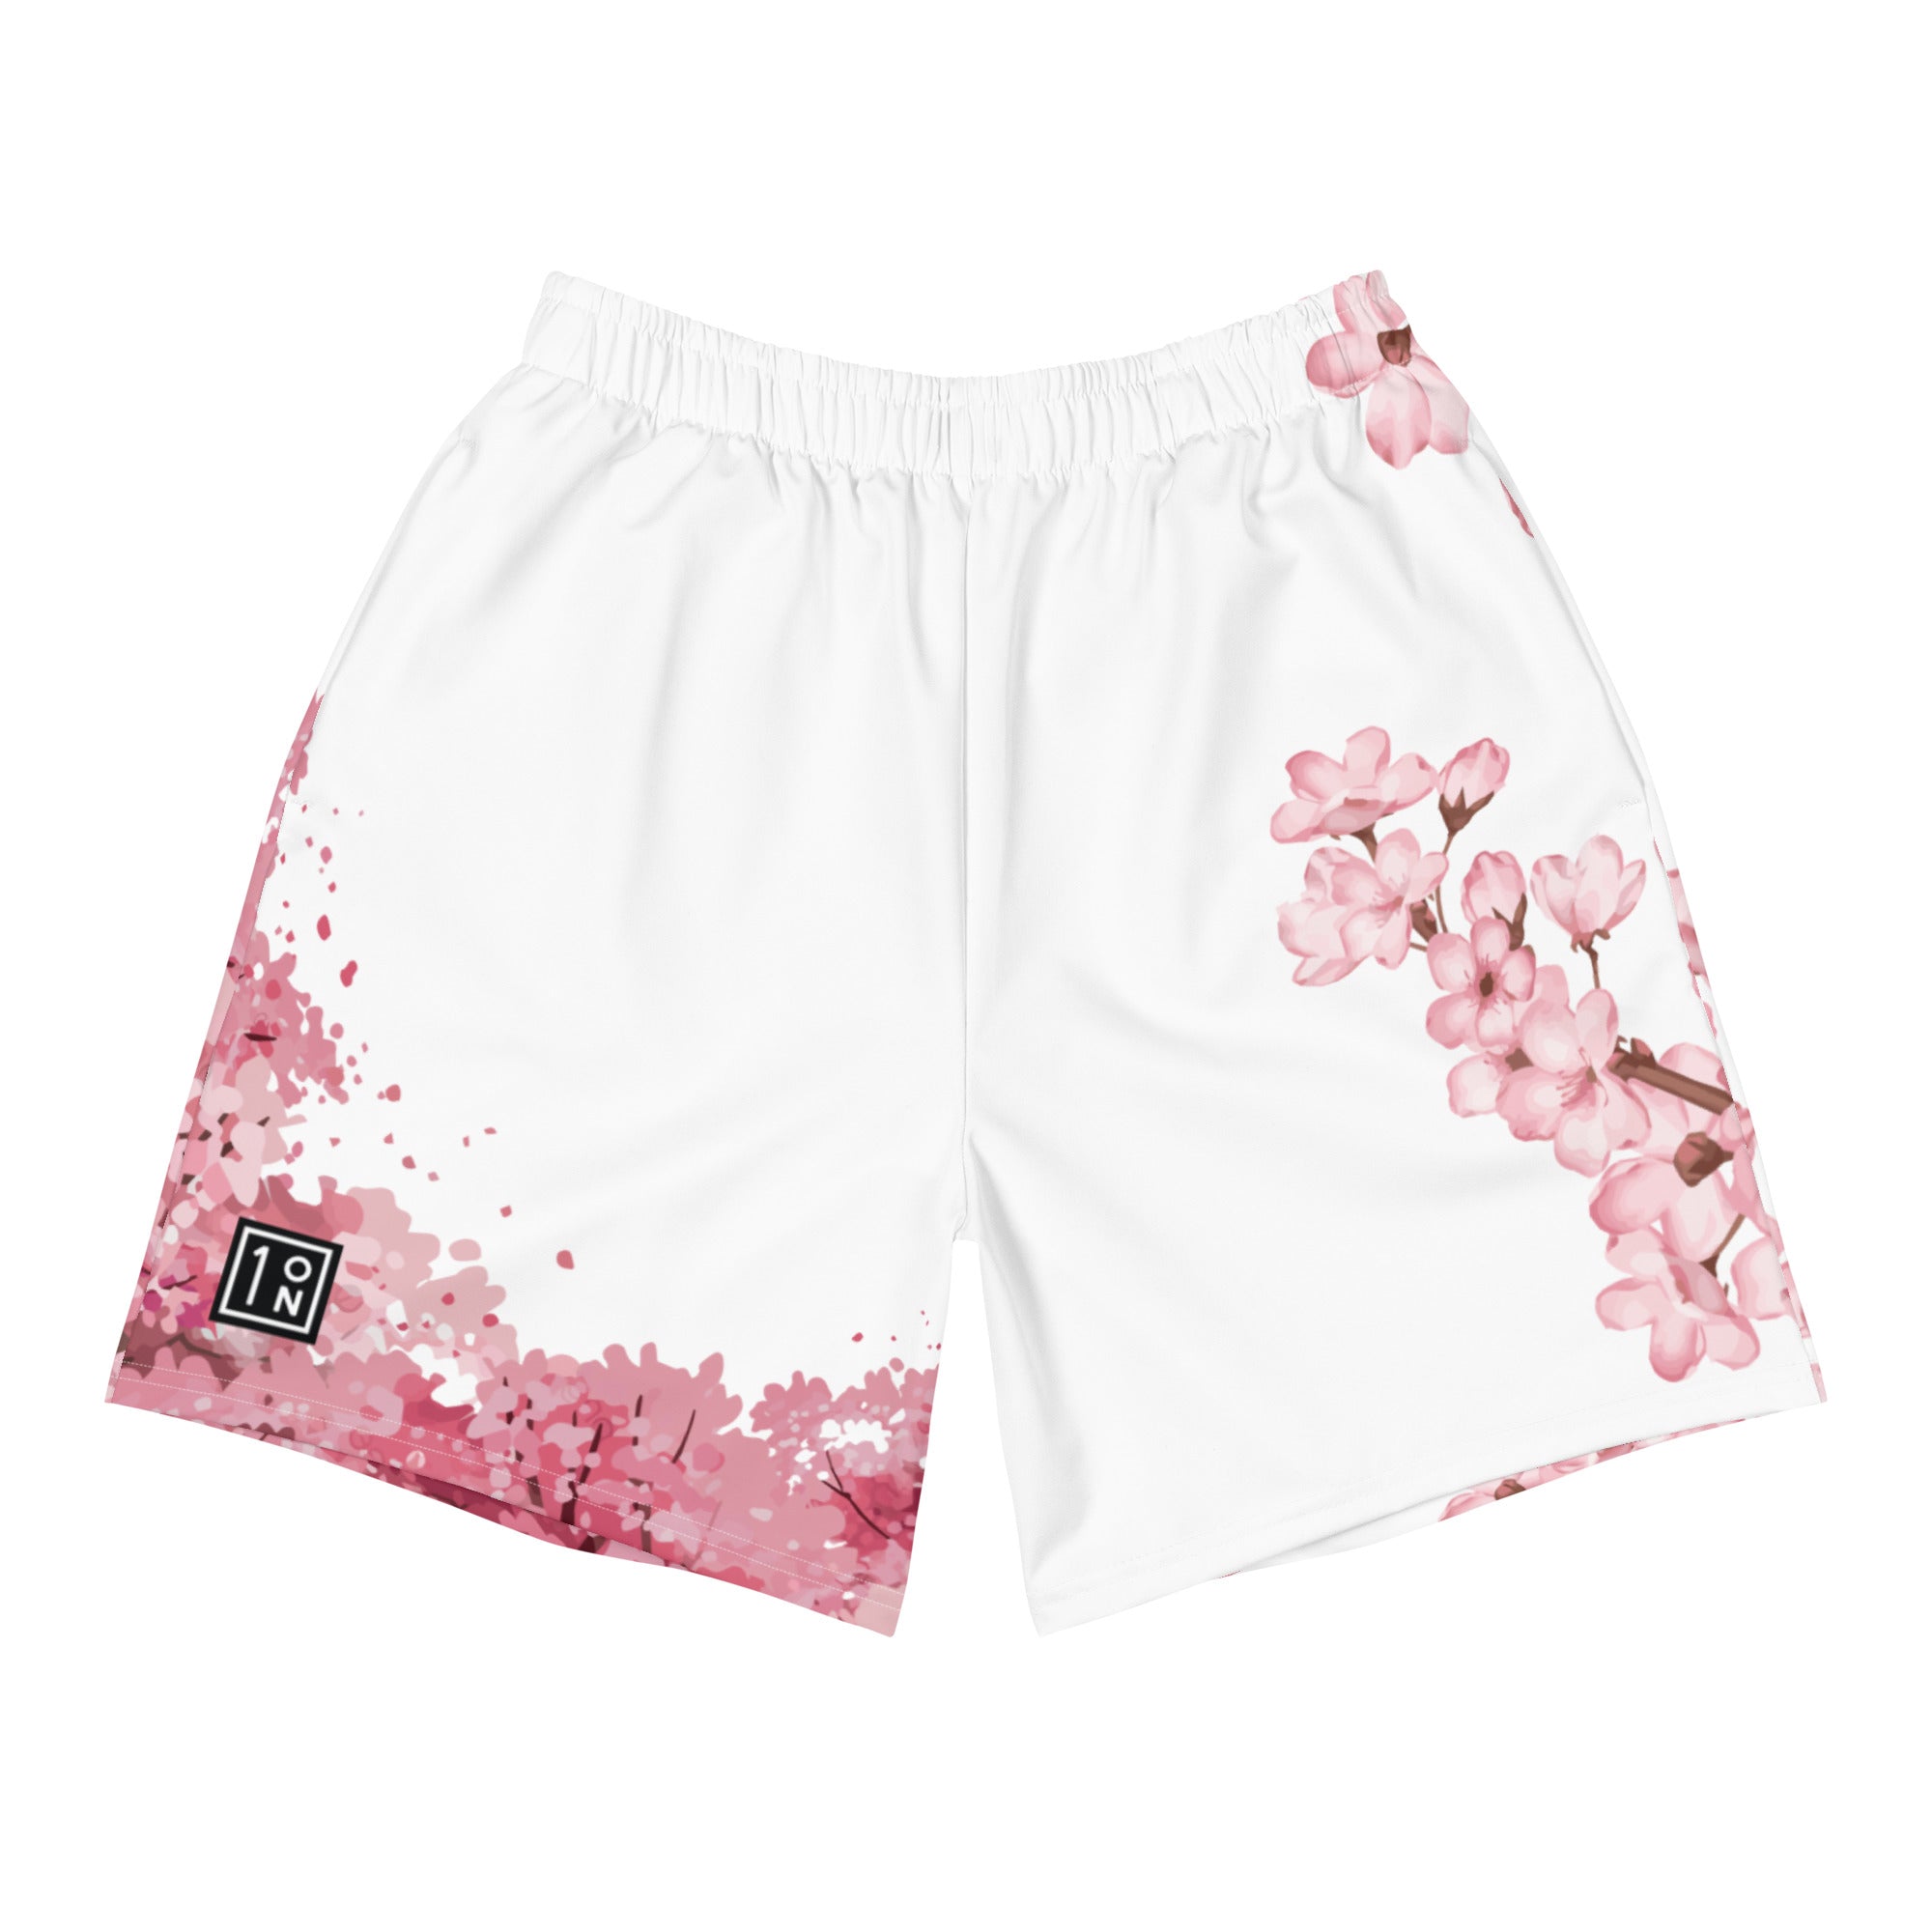 vapor 95 NWOT Men’s cherry blossom Athletic shorts size 36 pink Q2